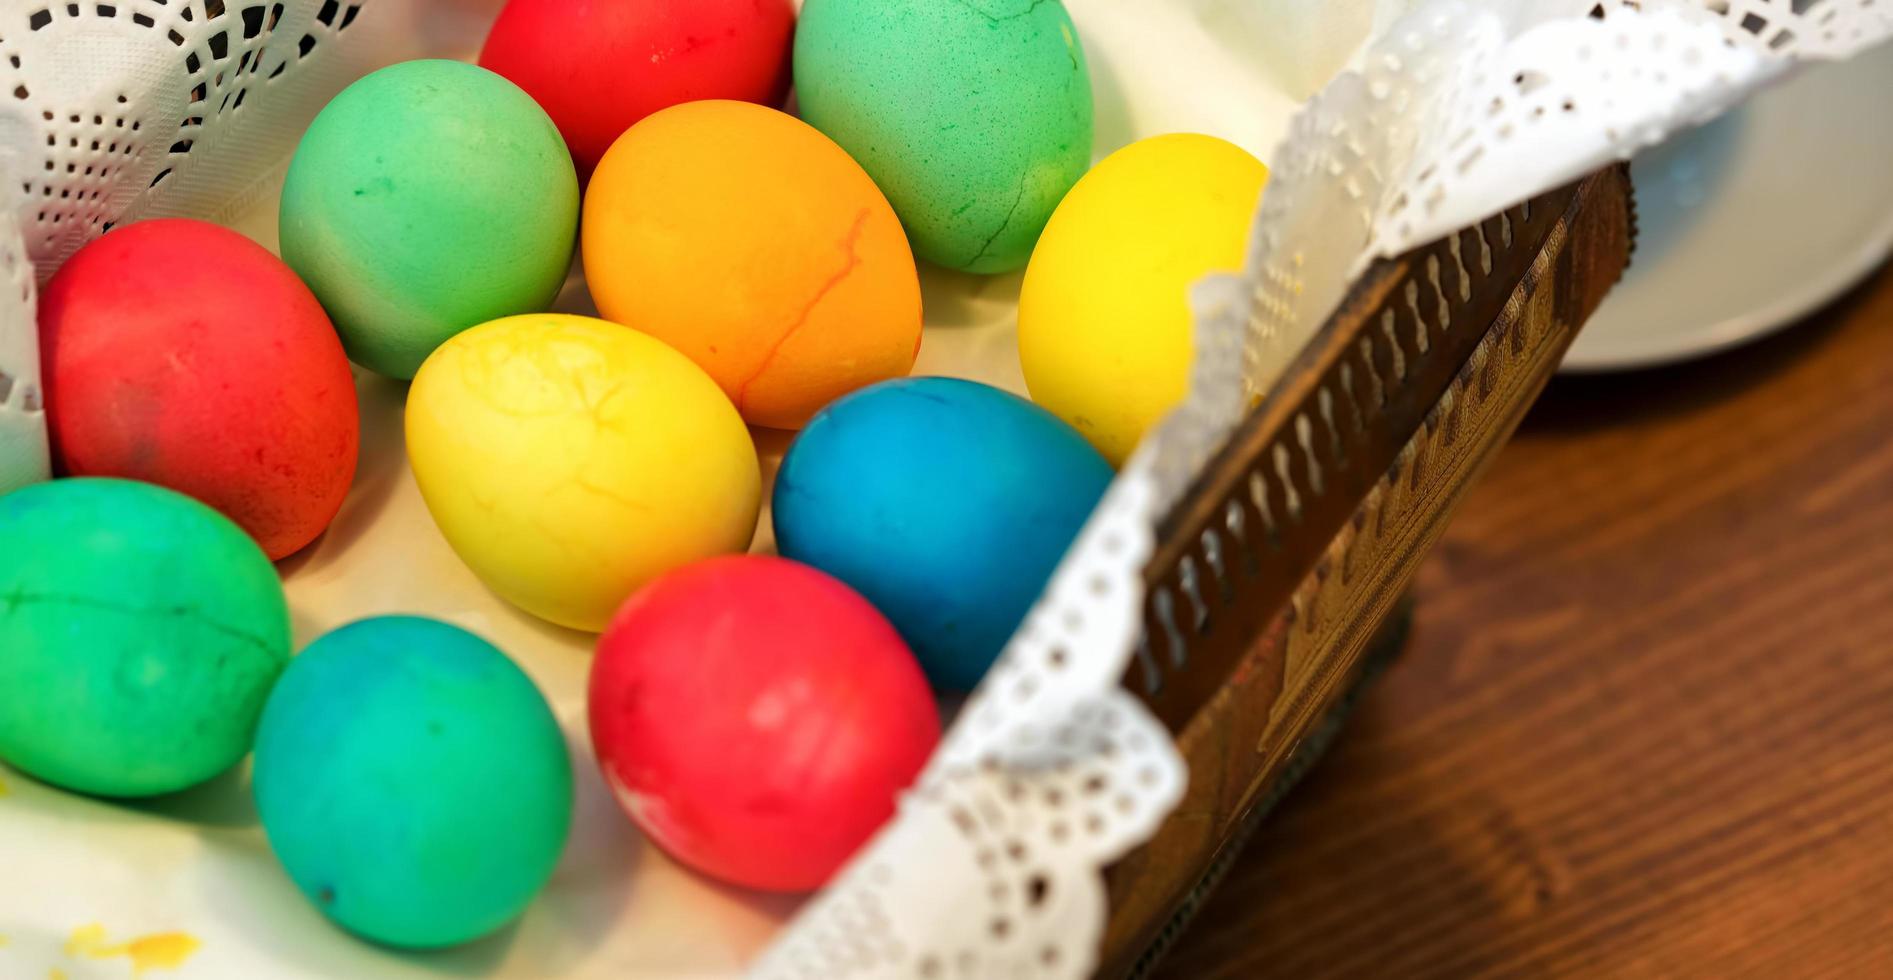 huevos de pascua de colores pascuales foto